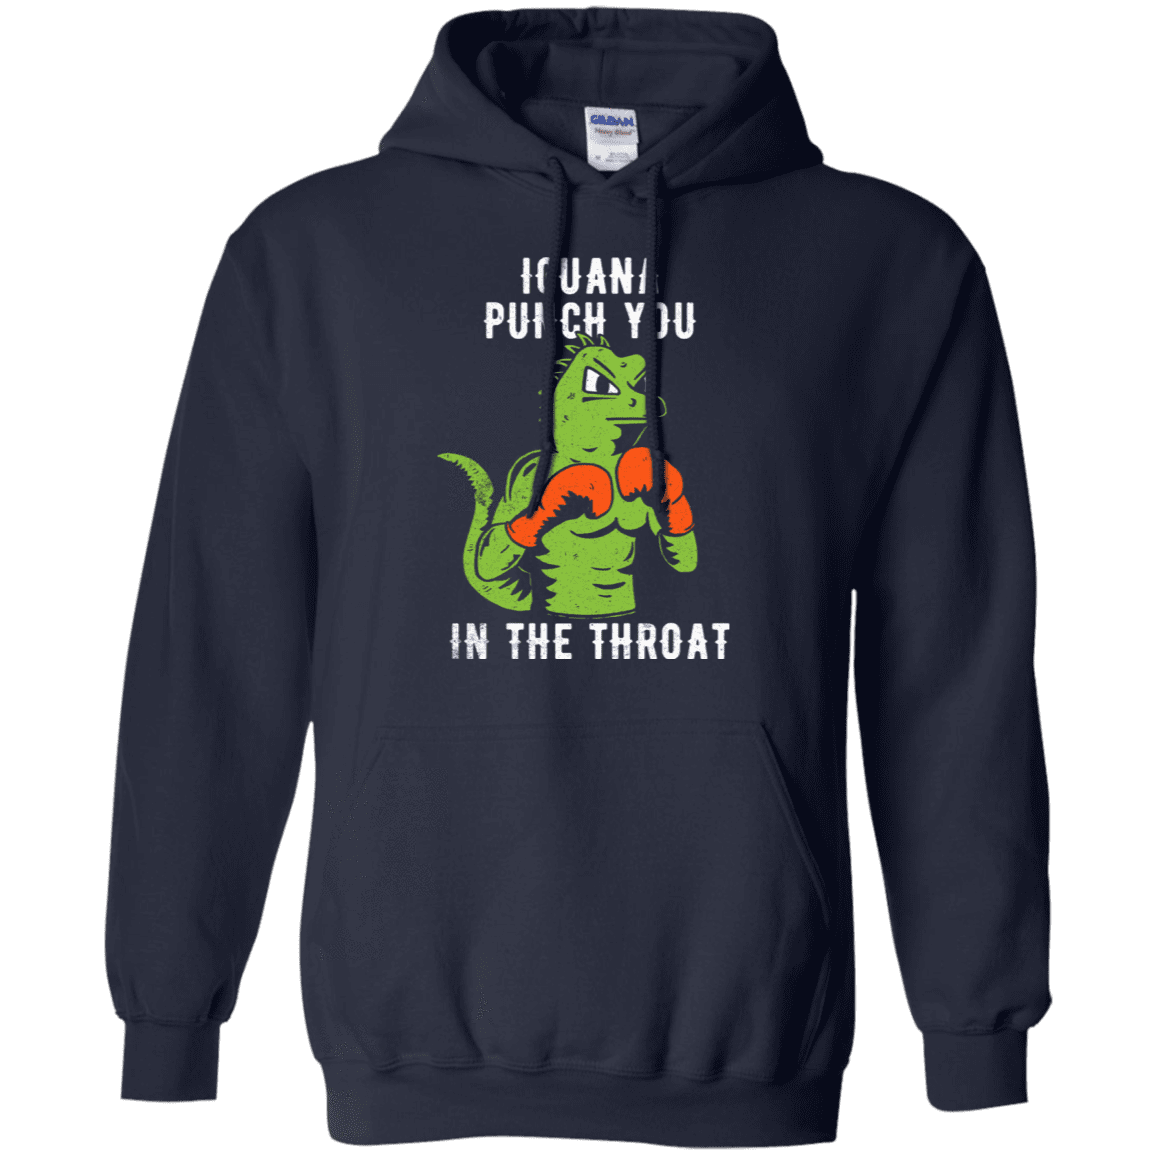 Sweatshirts Navy / S Iguana Punch You Pullover Hoodie